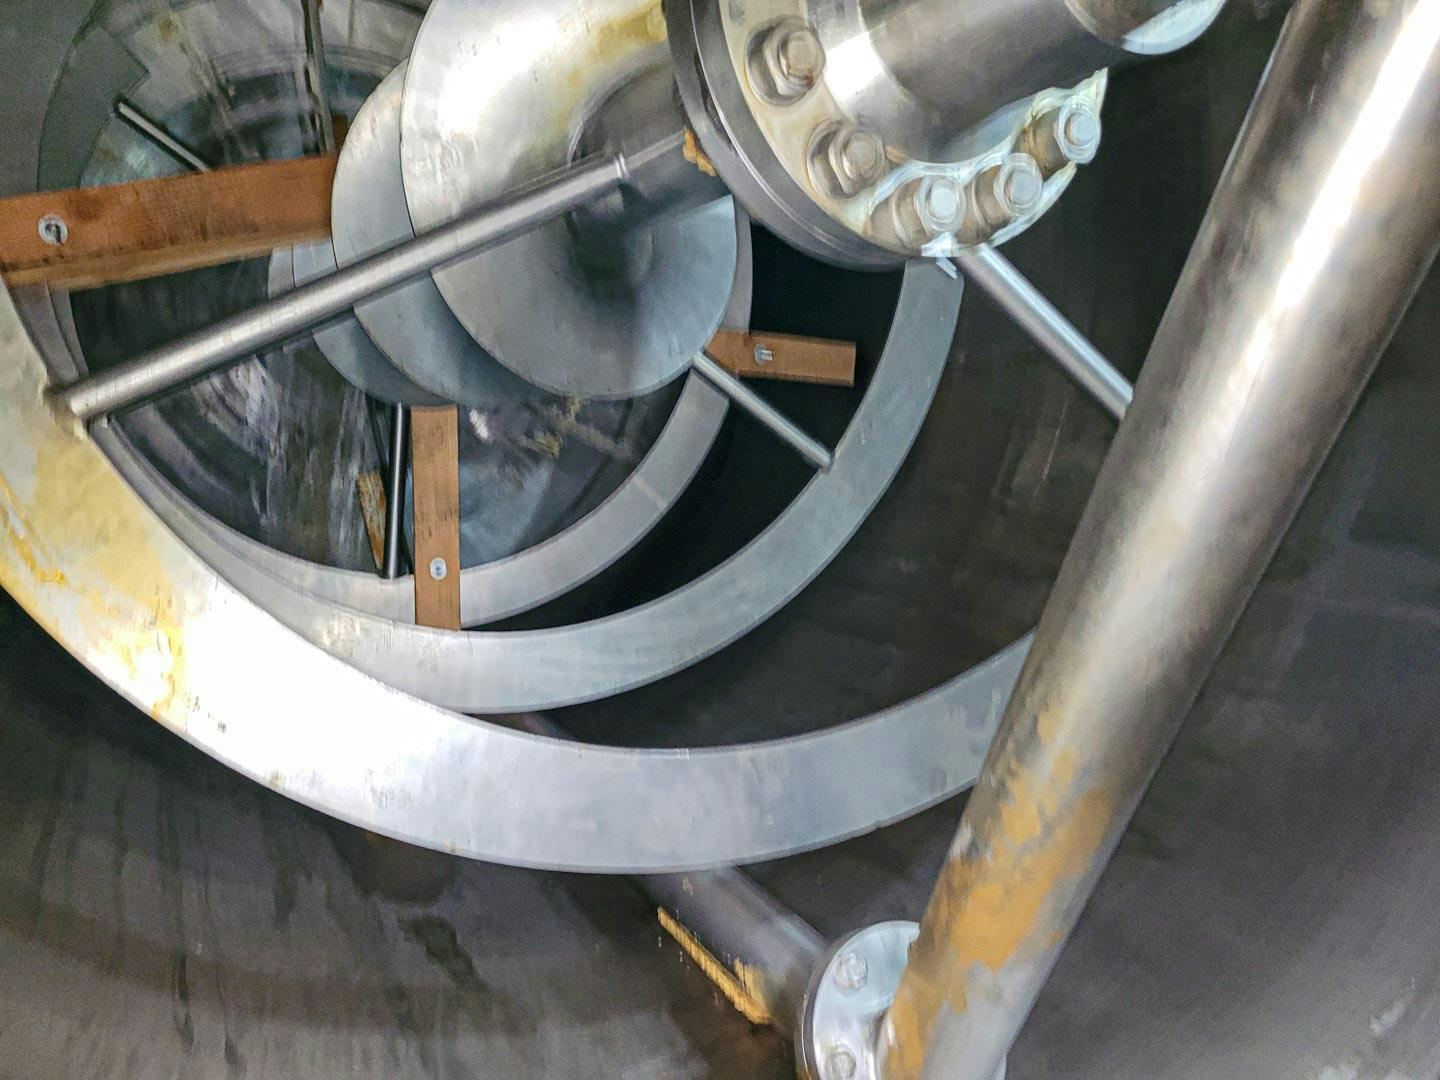 Cosmit - CTI 12465 Ltr - Reattore in acciaio inox - image 7